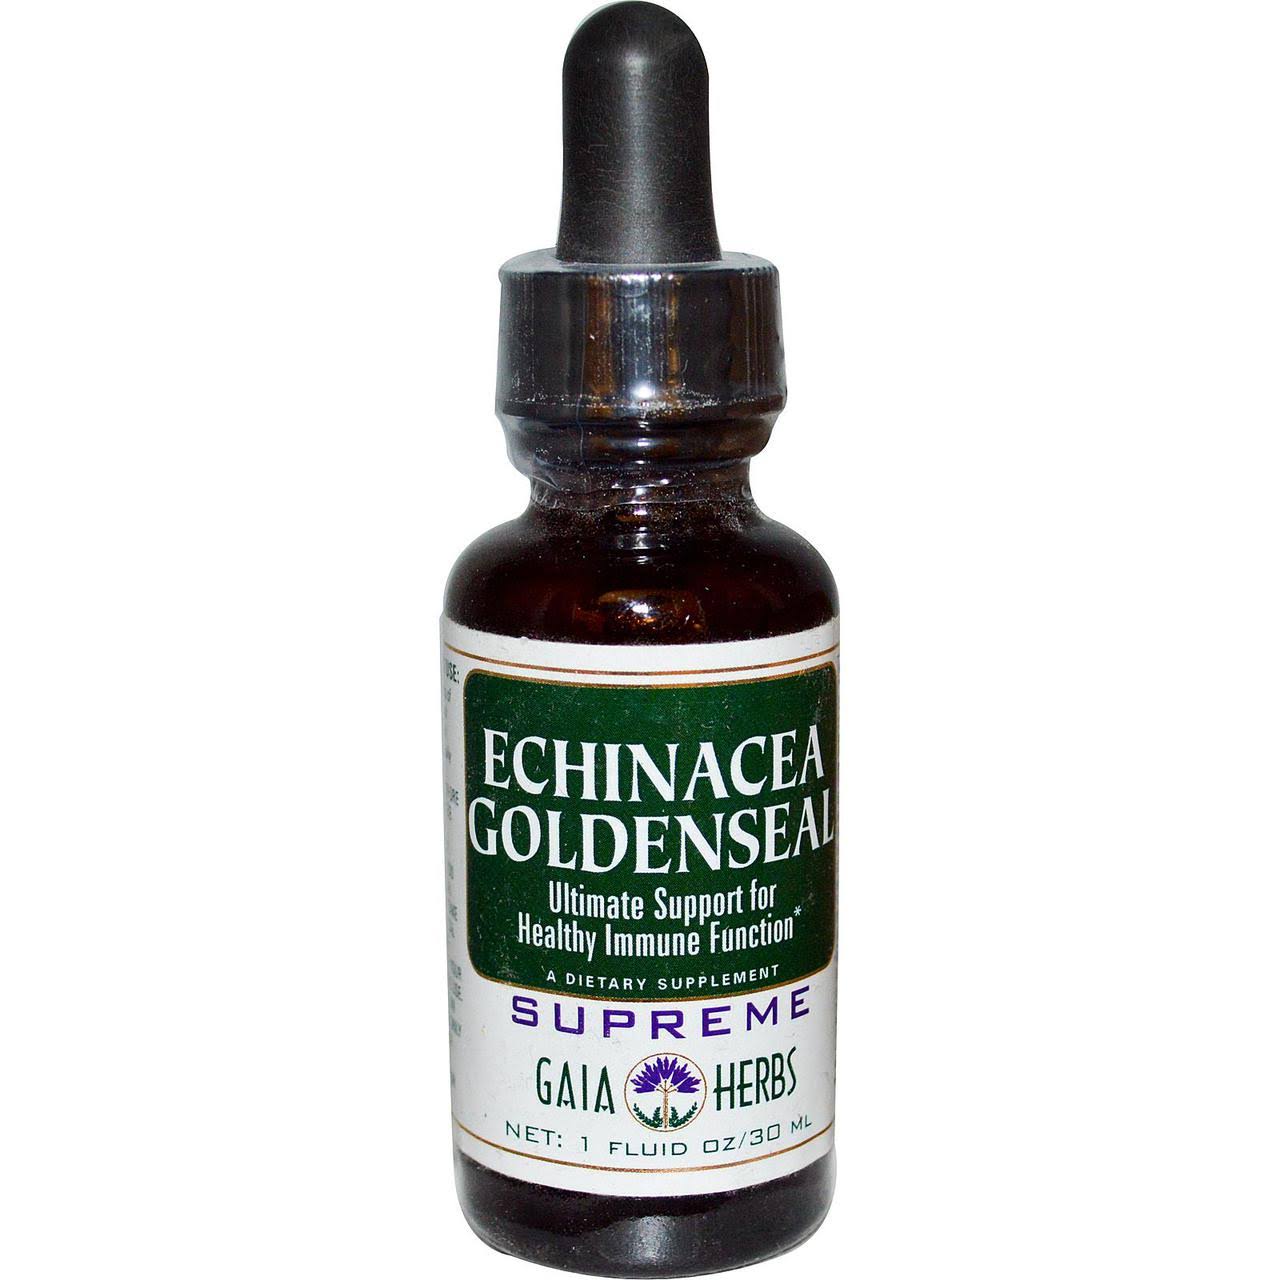 Gaia Herbs Echinacea Goldenseal Supreme - 1 FL oz (30 ml)